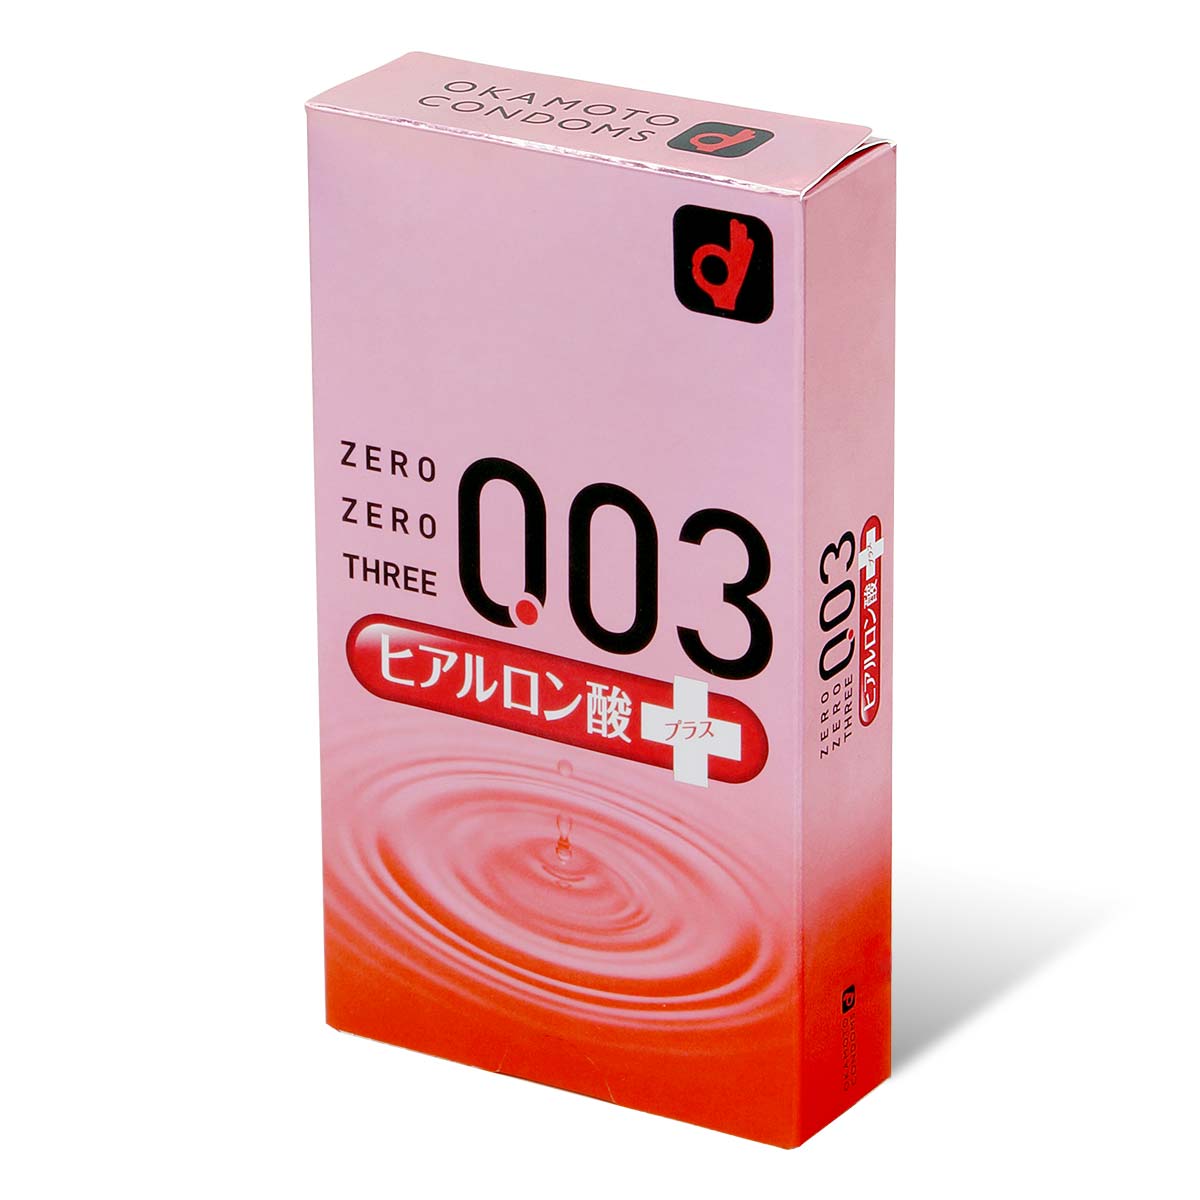 Zero Zero Three 0.03 Hyaluronic acid (Japan Edition) 10's Pack Latex Condom-p_1